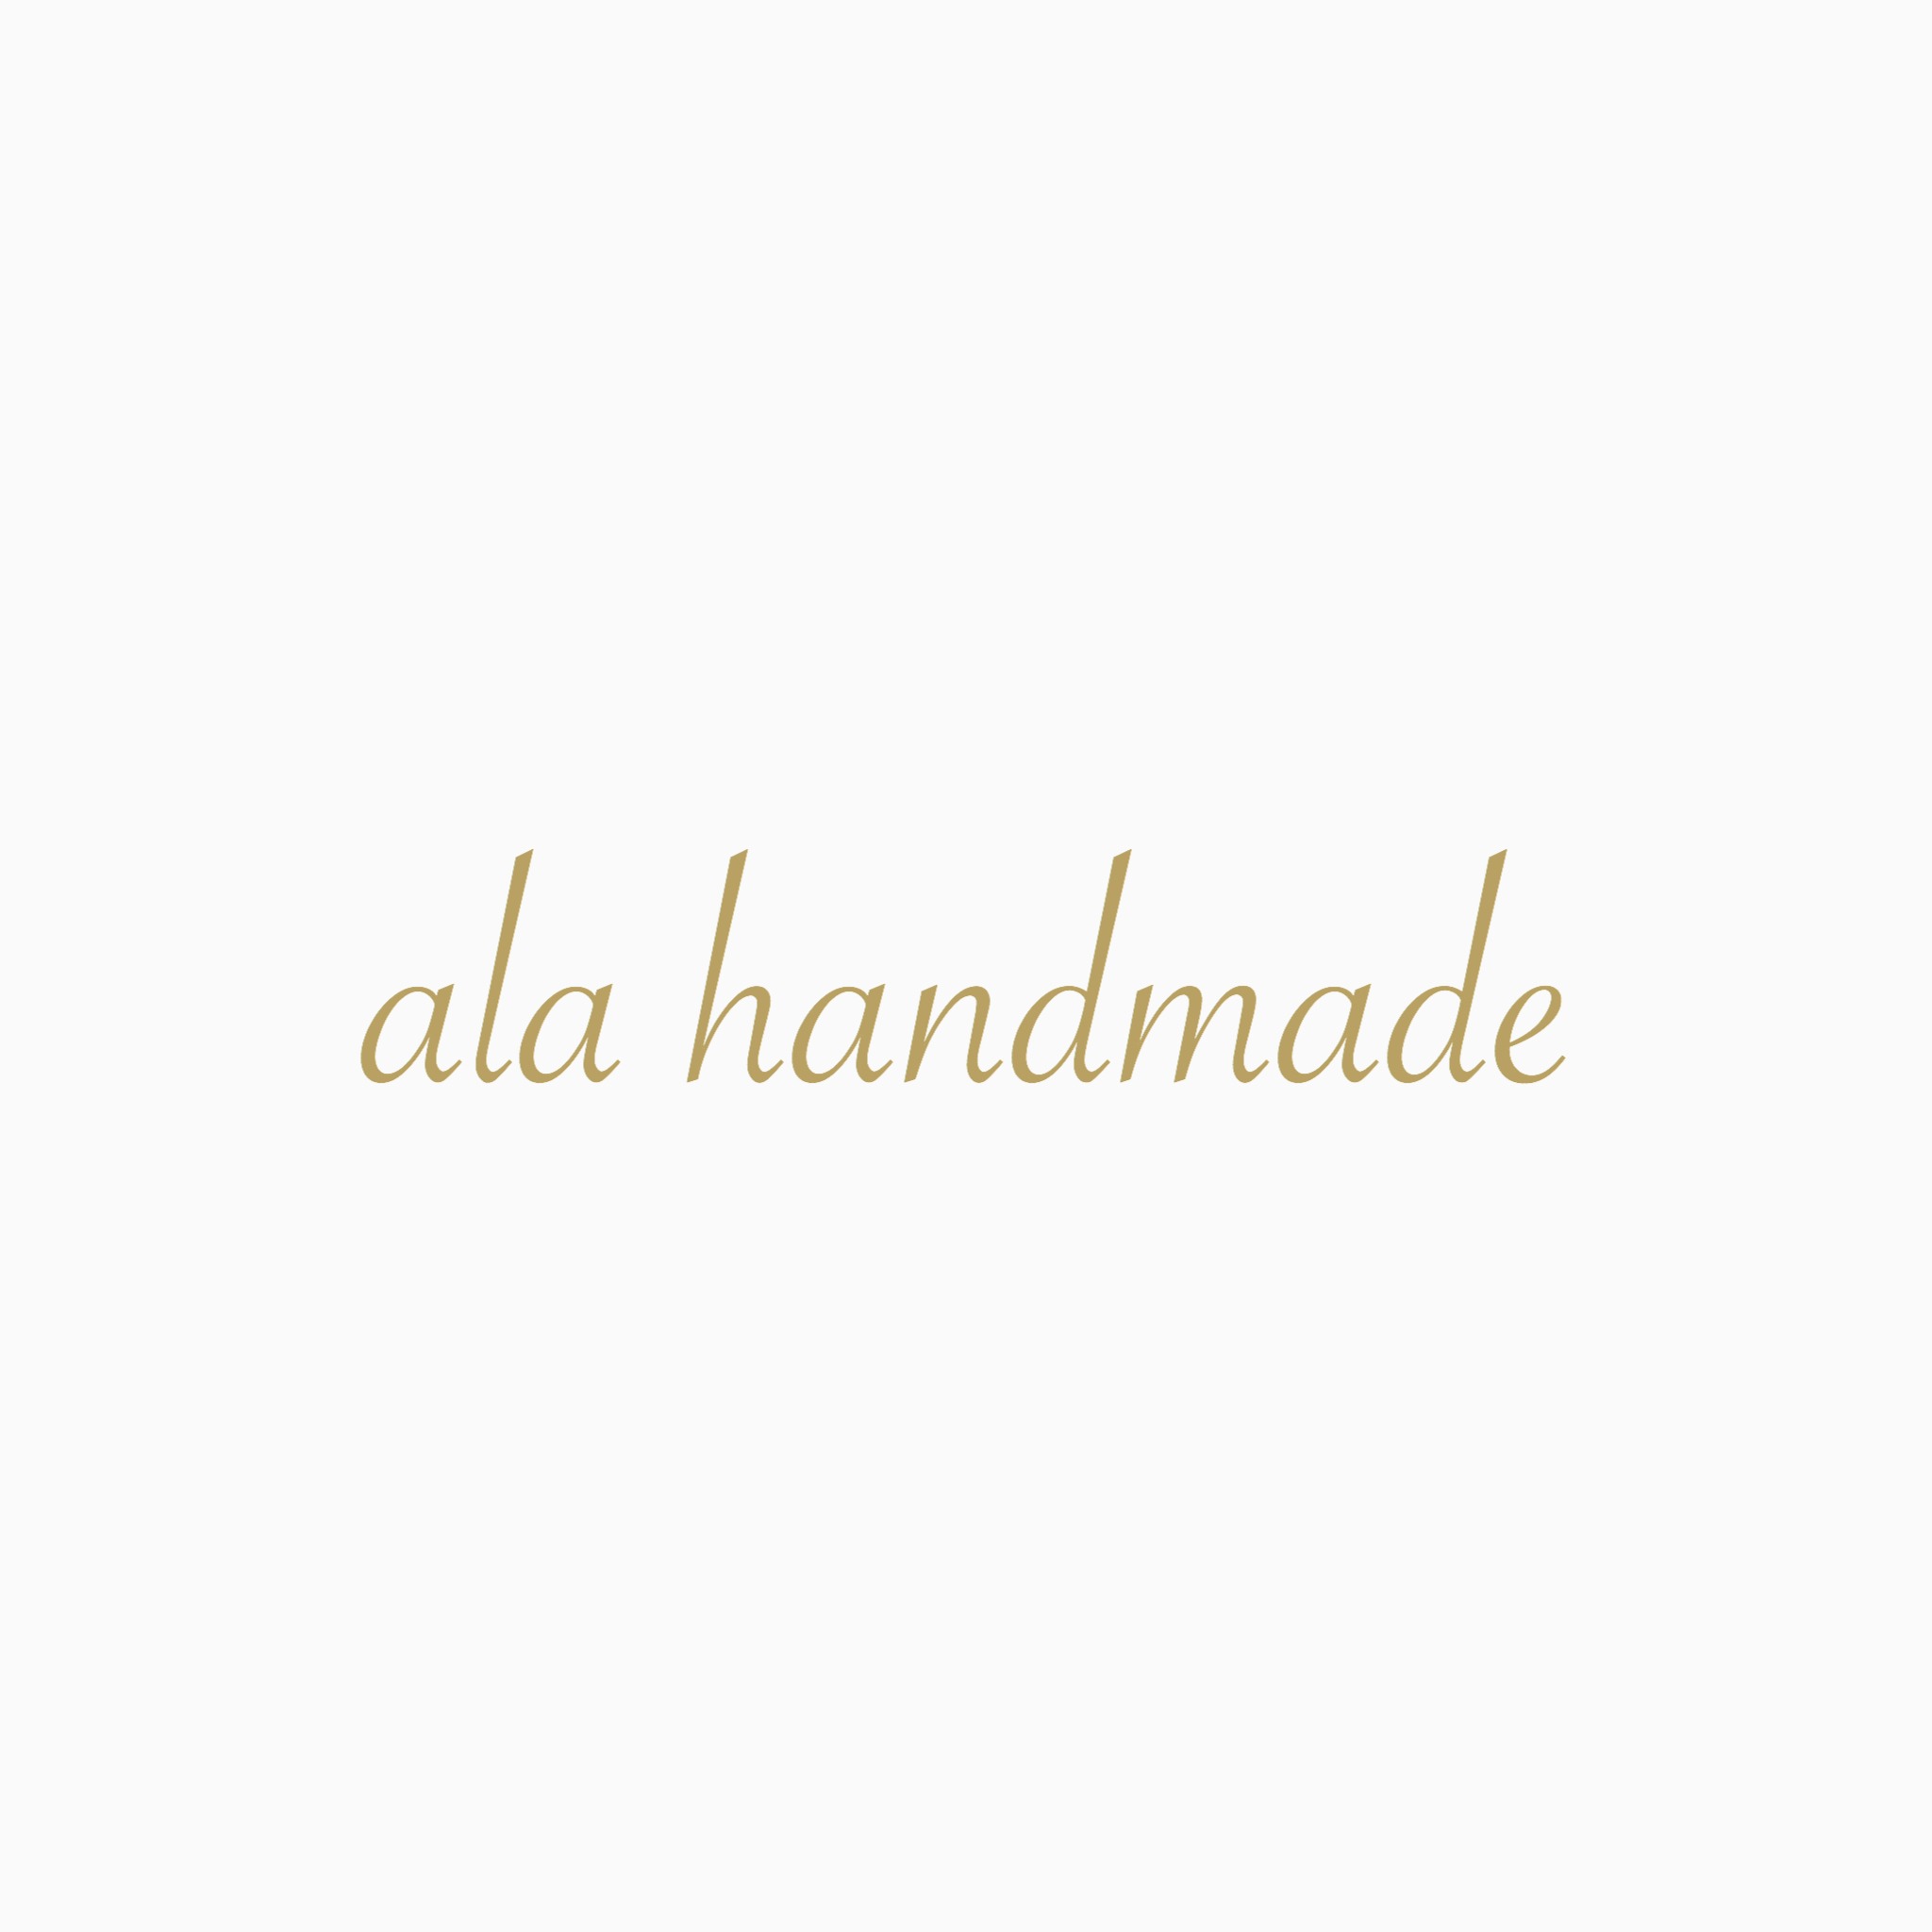 ala handmade